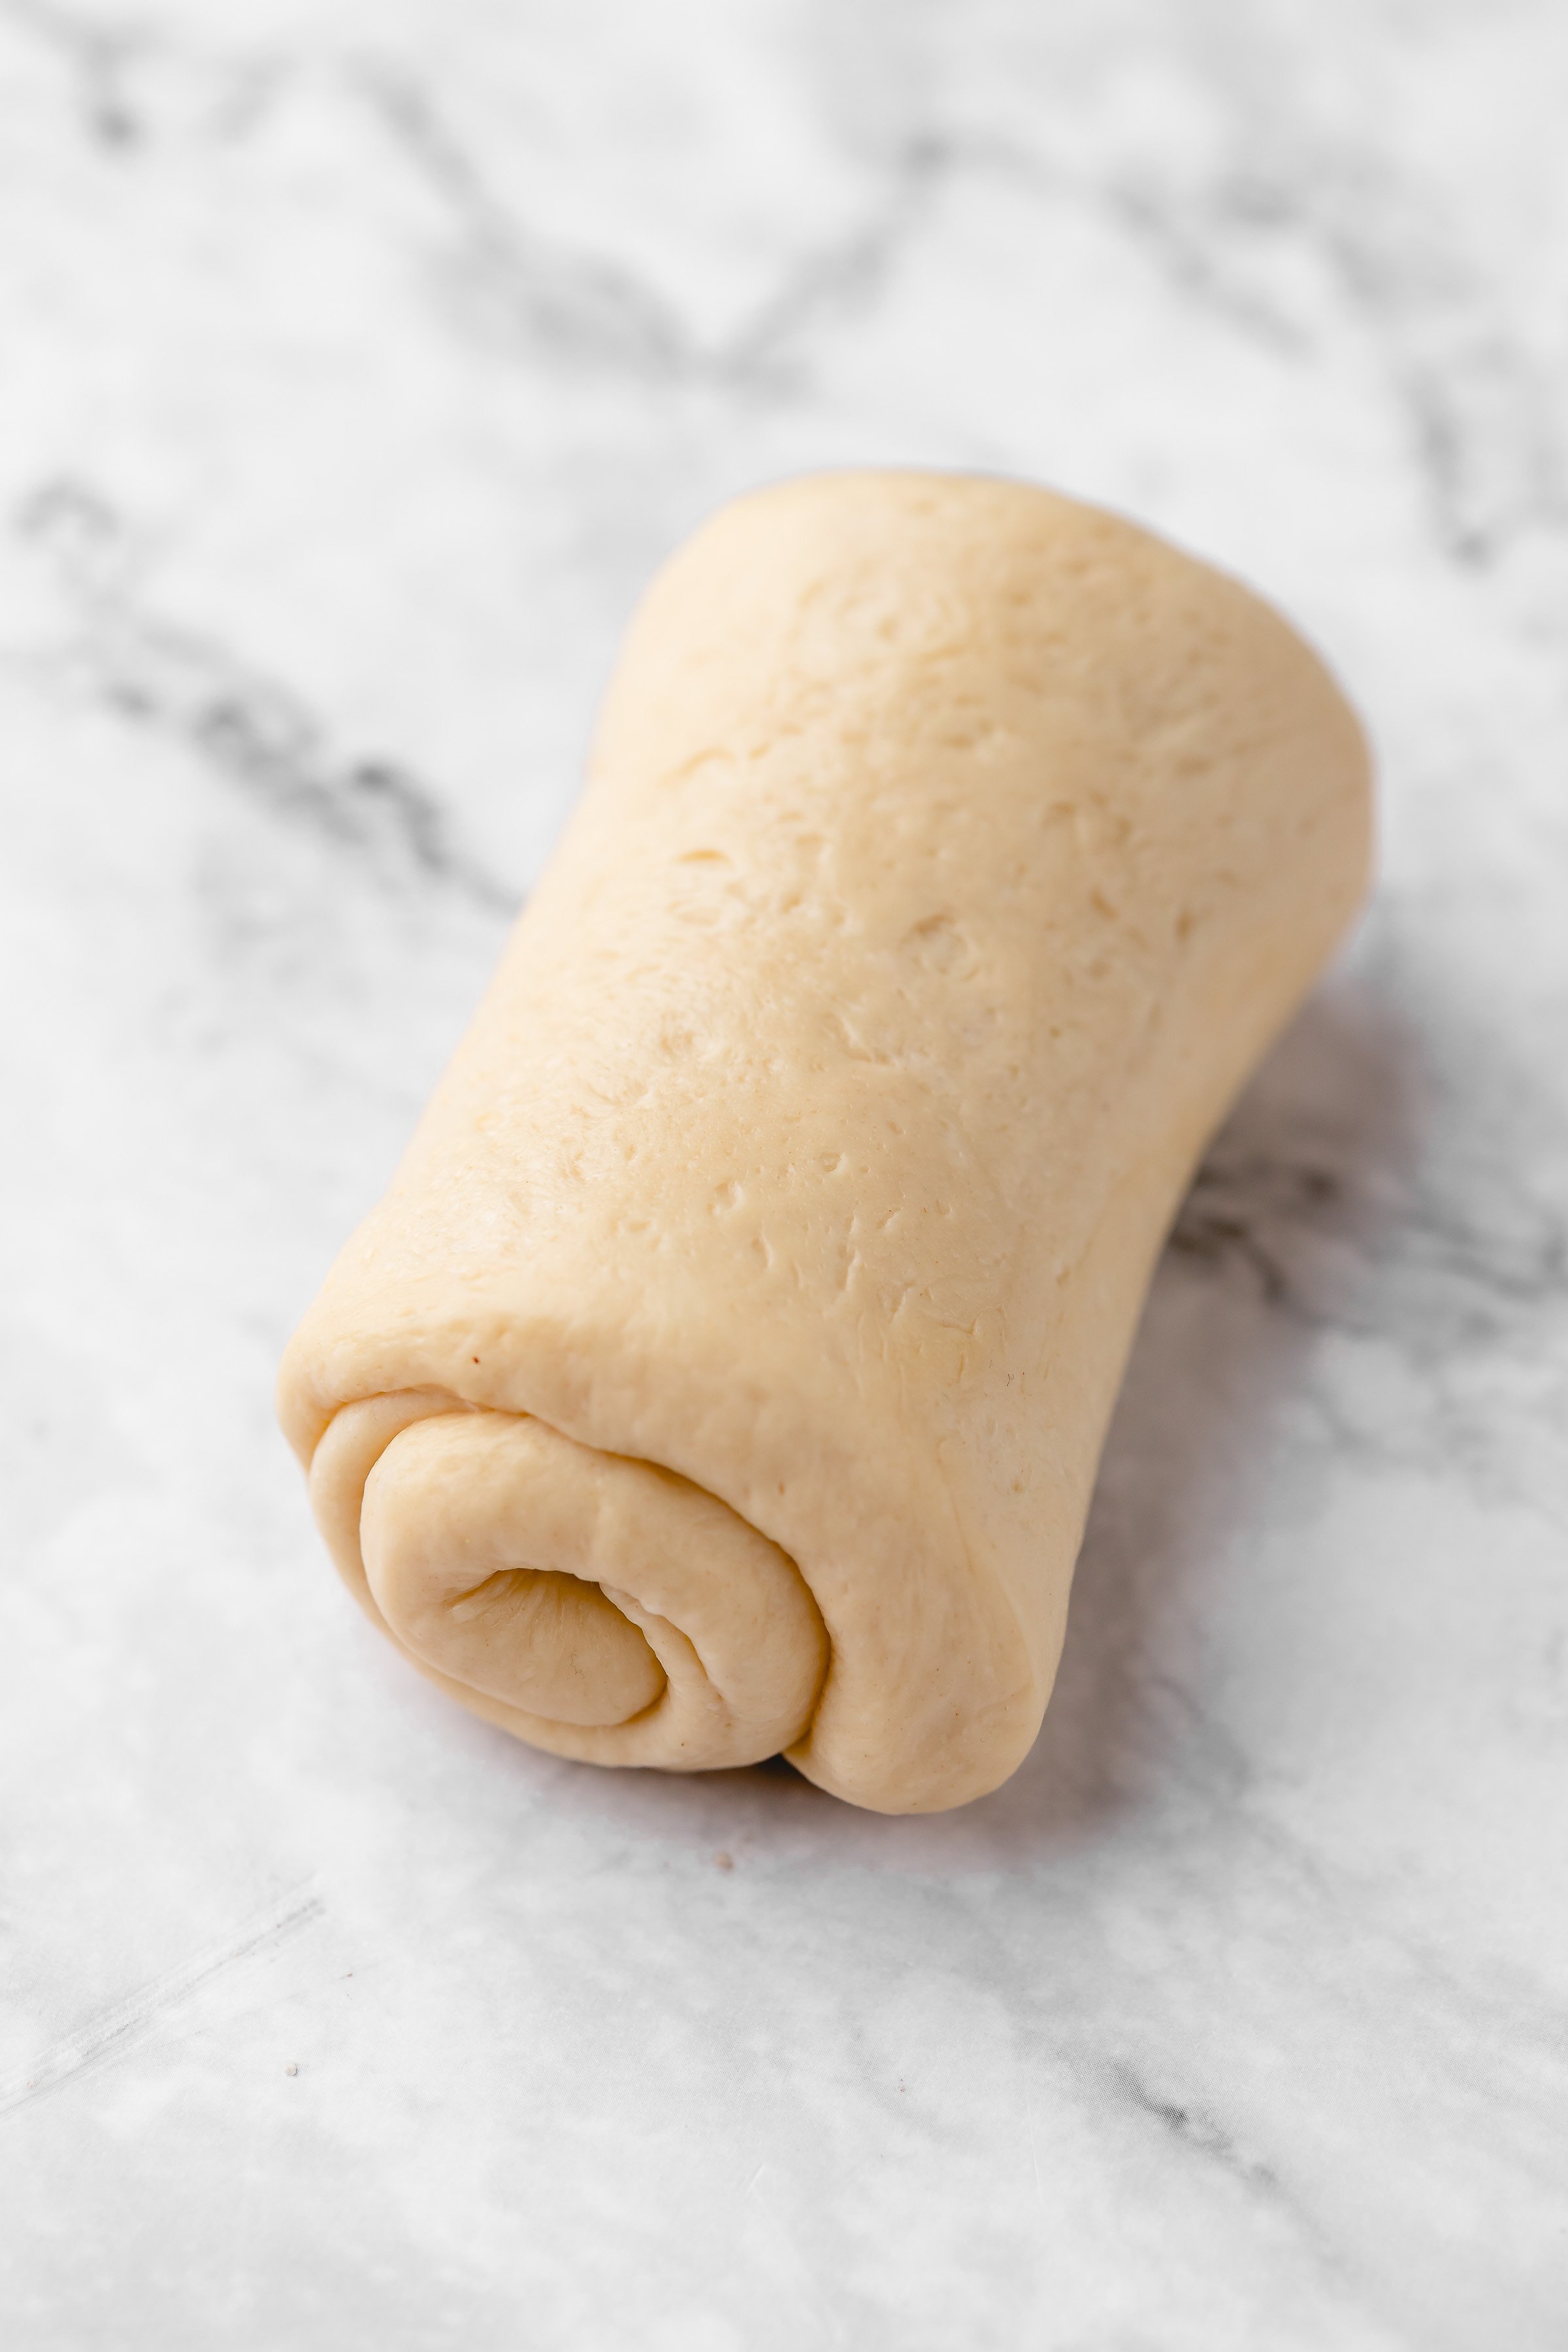 Roll of milk bread dough